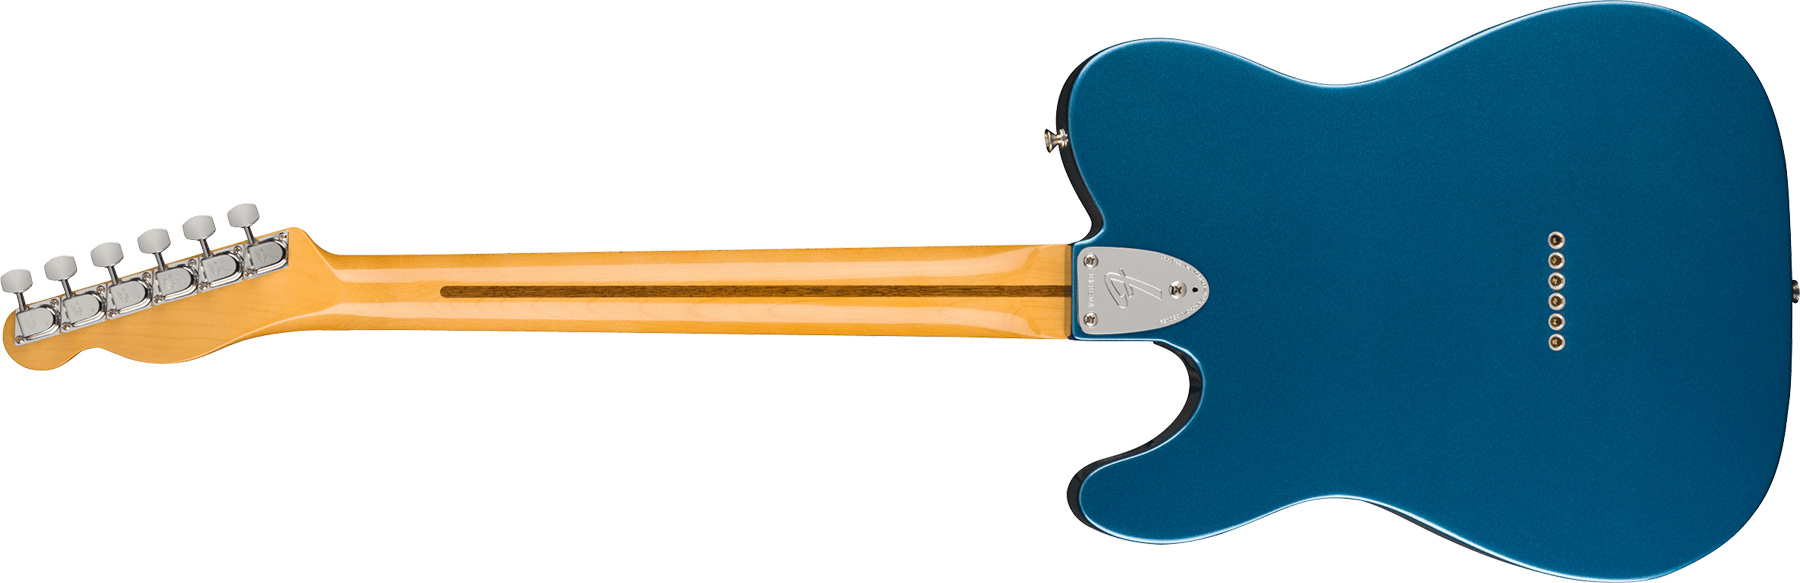 Fender Tele Thinline 1972 American Vintage Ii Usa 2h Ht Mn - Lake Placid Blue - Guitarra eléctrica con forma de tel - Variation 1